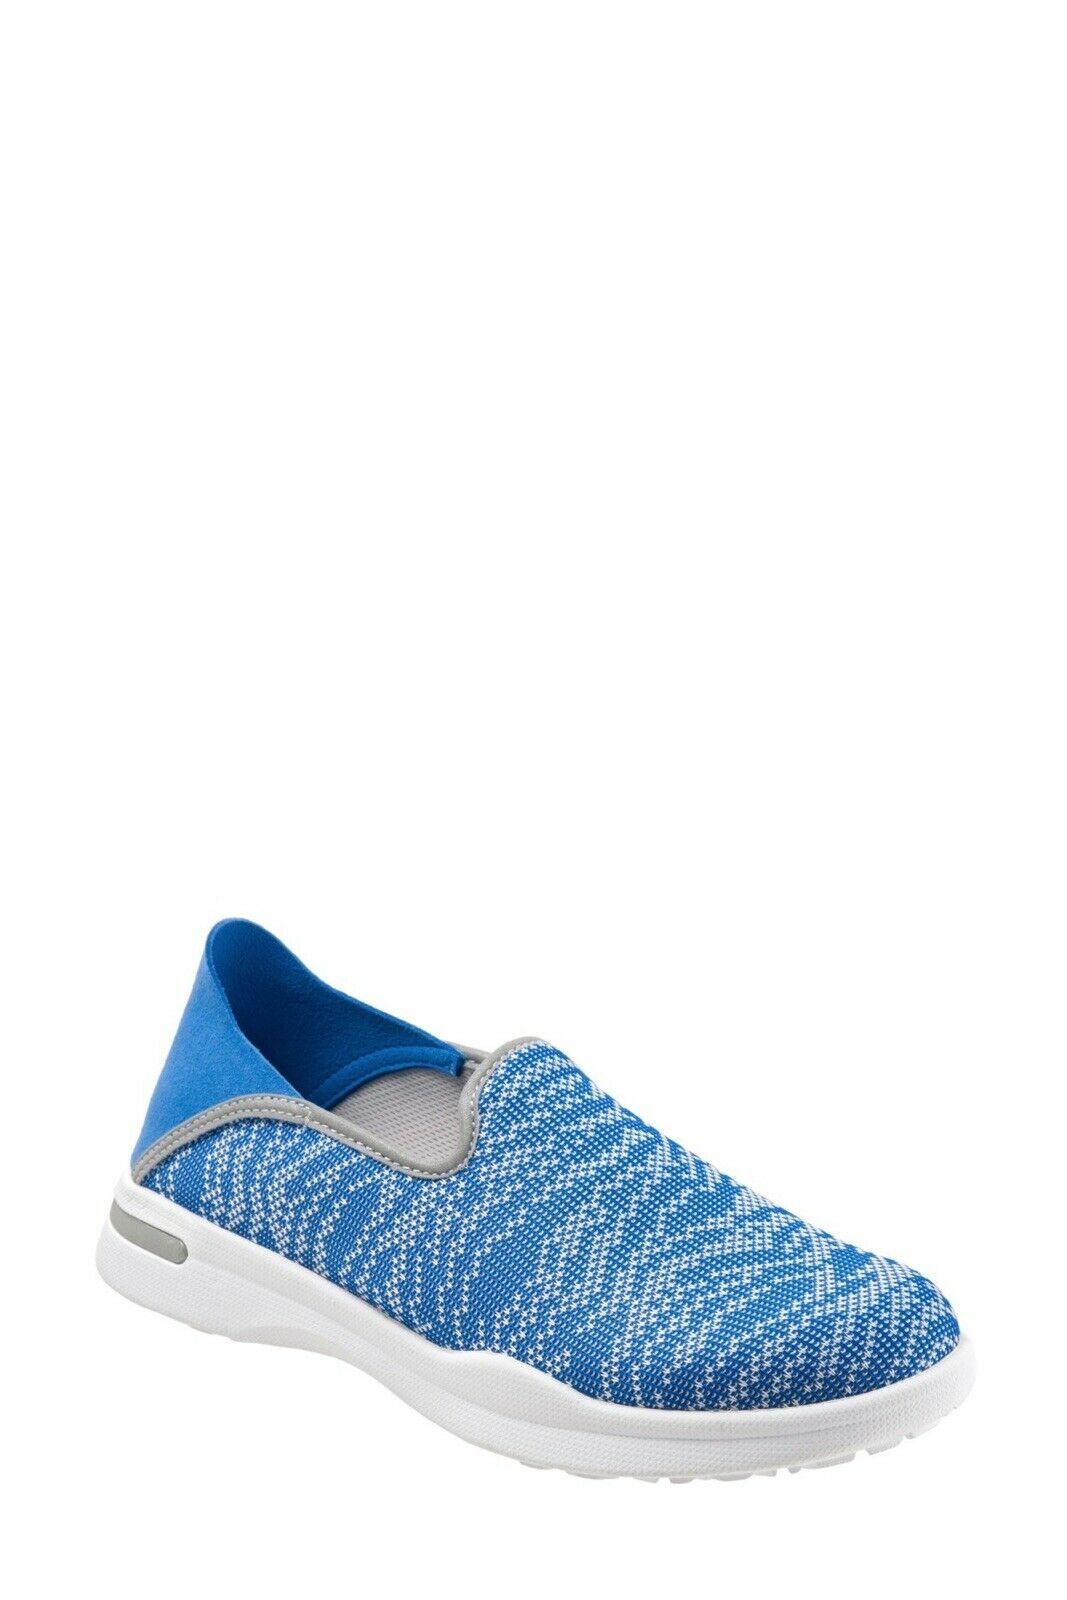 NEW SoftWalk Convertible Slip-On Simba Knit Flat Sneaker Drop Down Heel Blue 9W